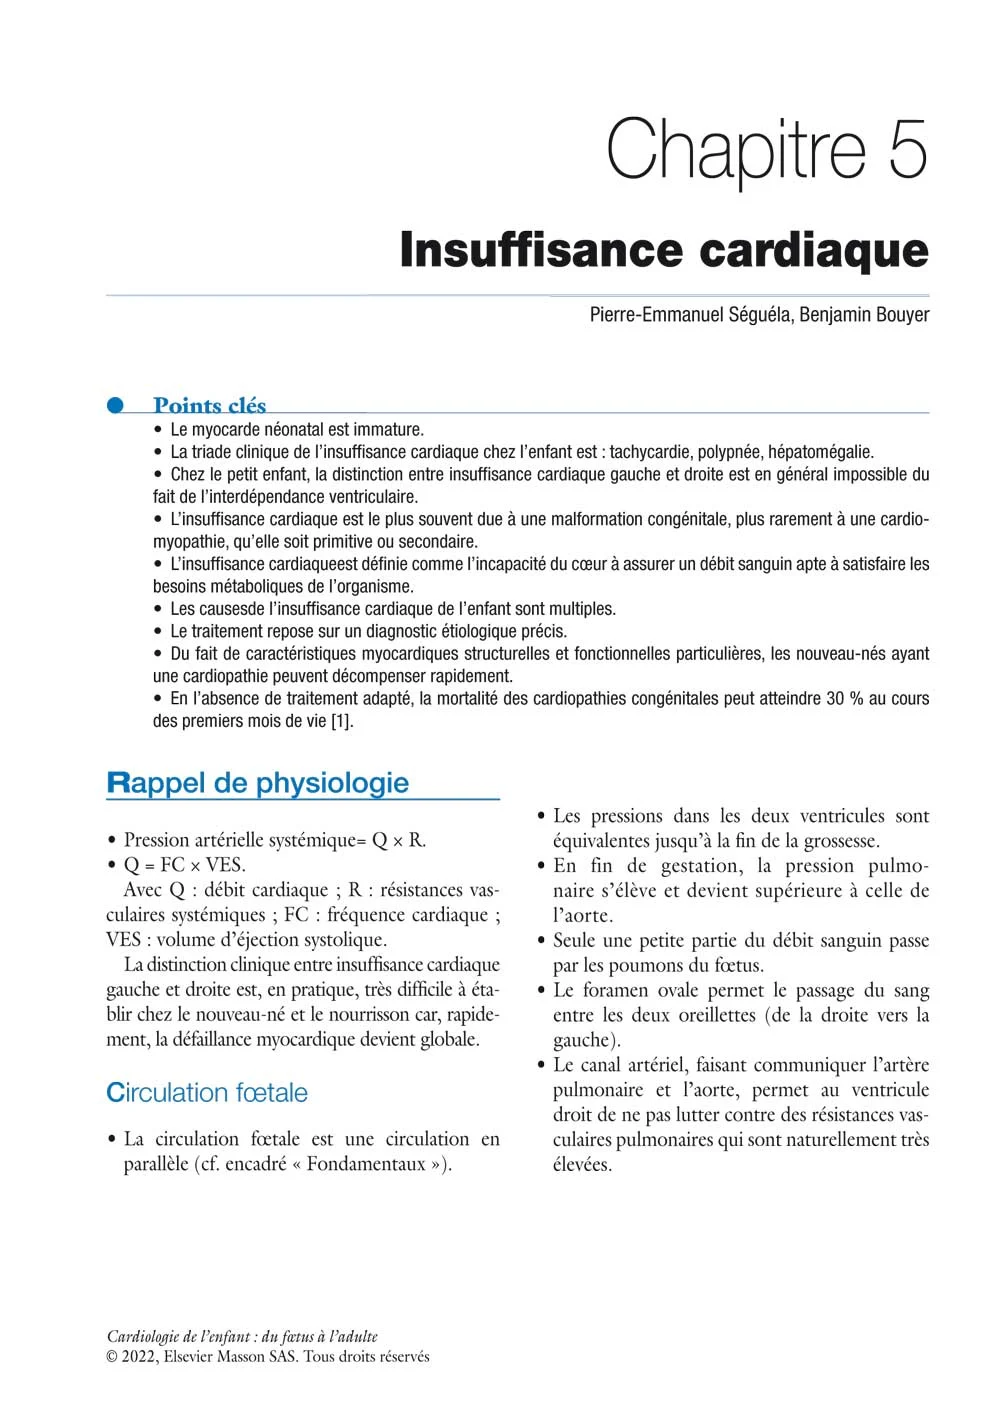 Chapitre 5 Insuffisance cardiaque, page 39